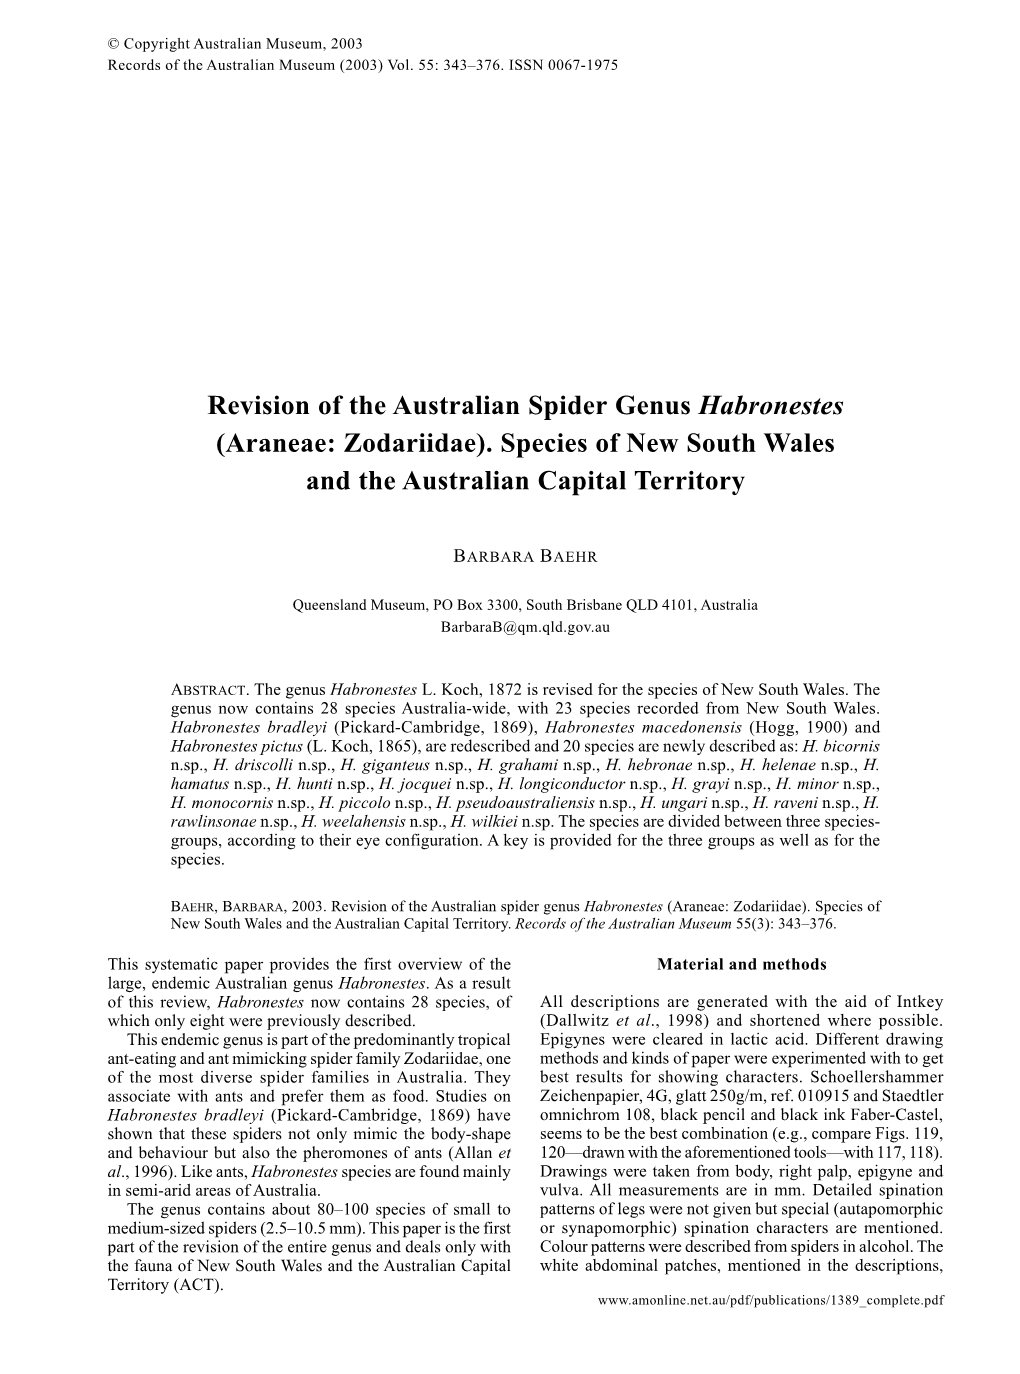 Revision of the Australian Spider Genus Habronestes (Araneae: Zodariidae)